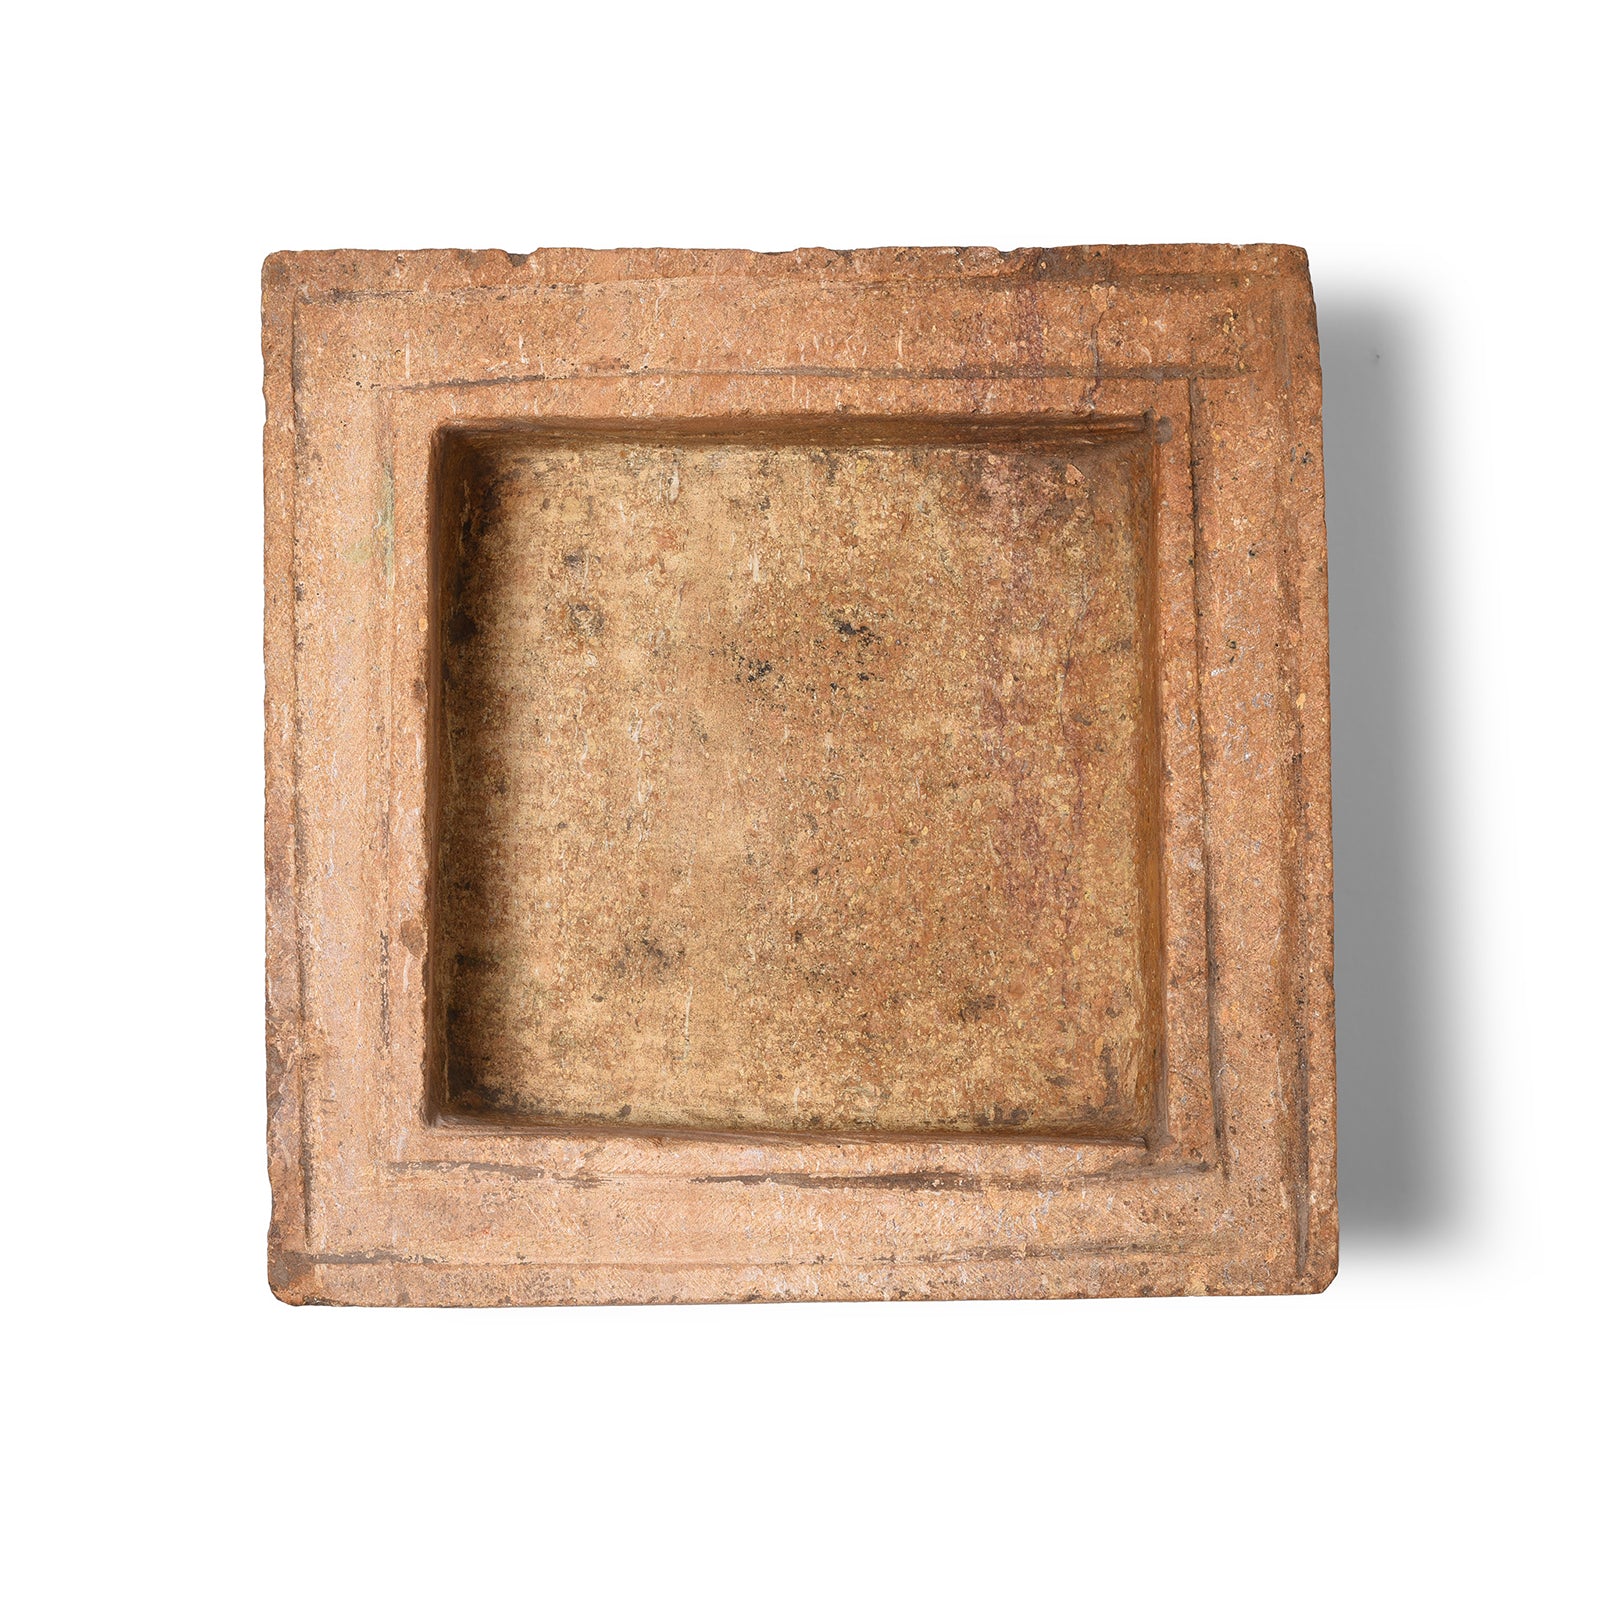 Antique Carved Stone Bird Bath From Rajasthan | Indigo Antiques